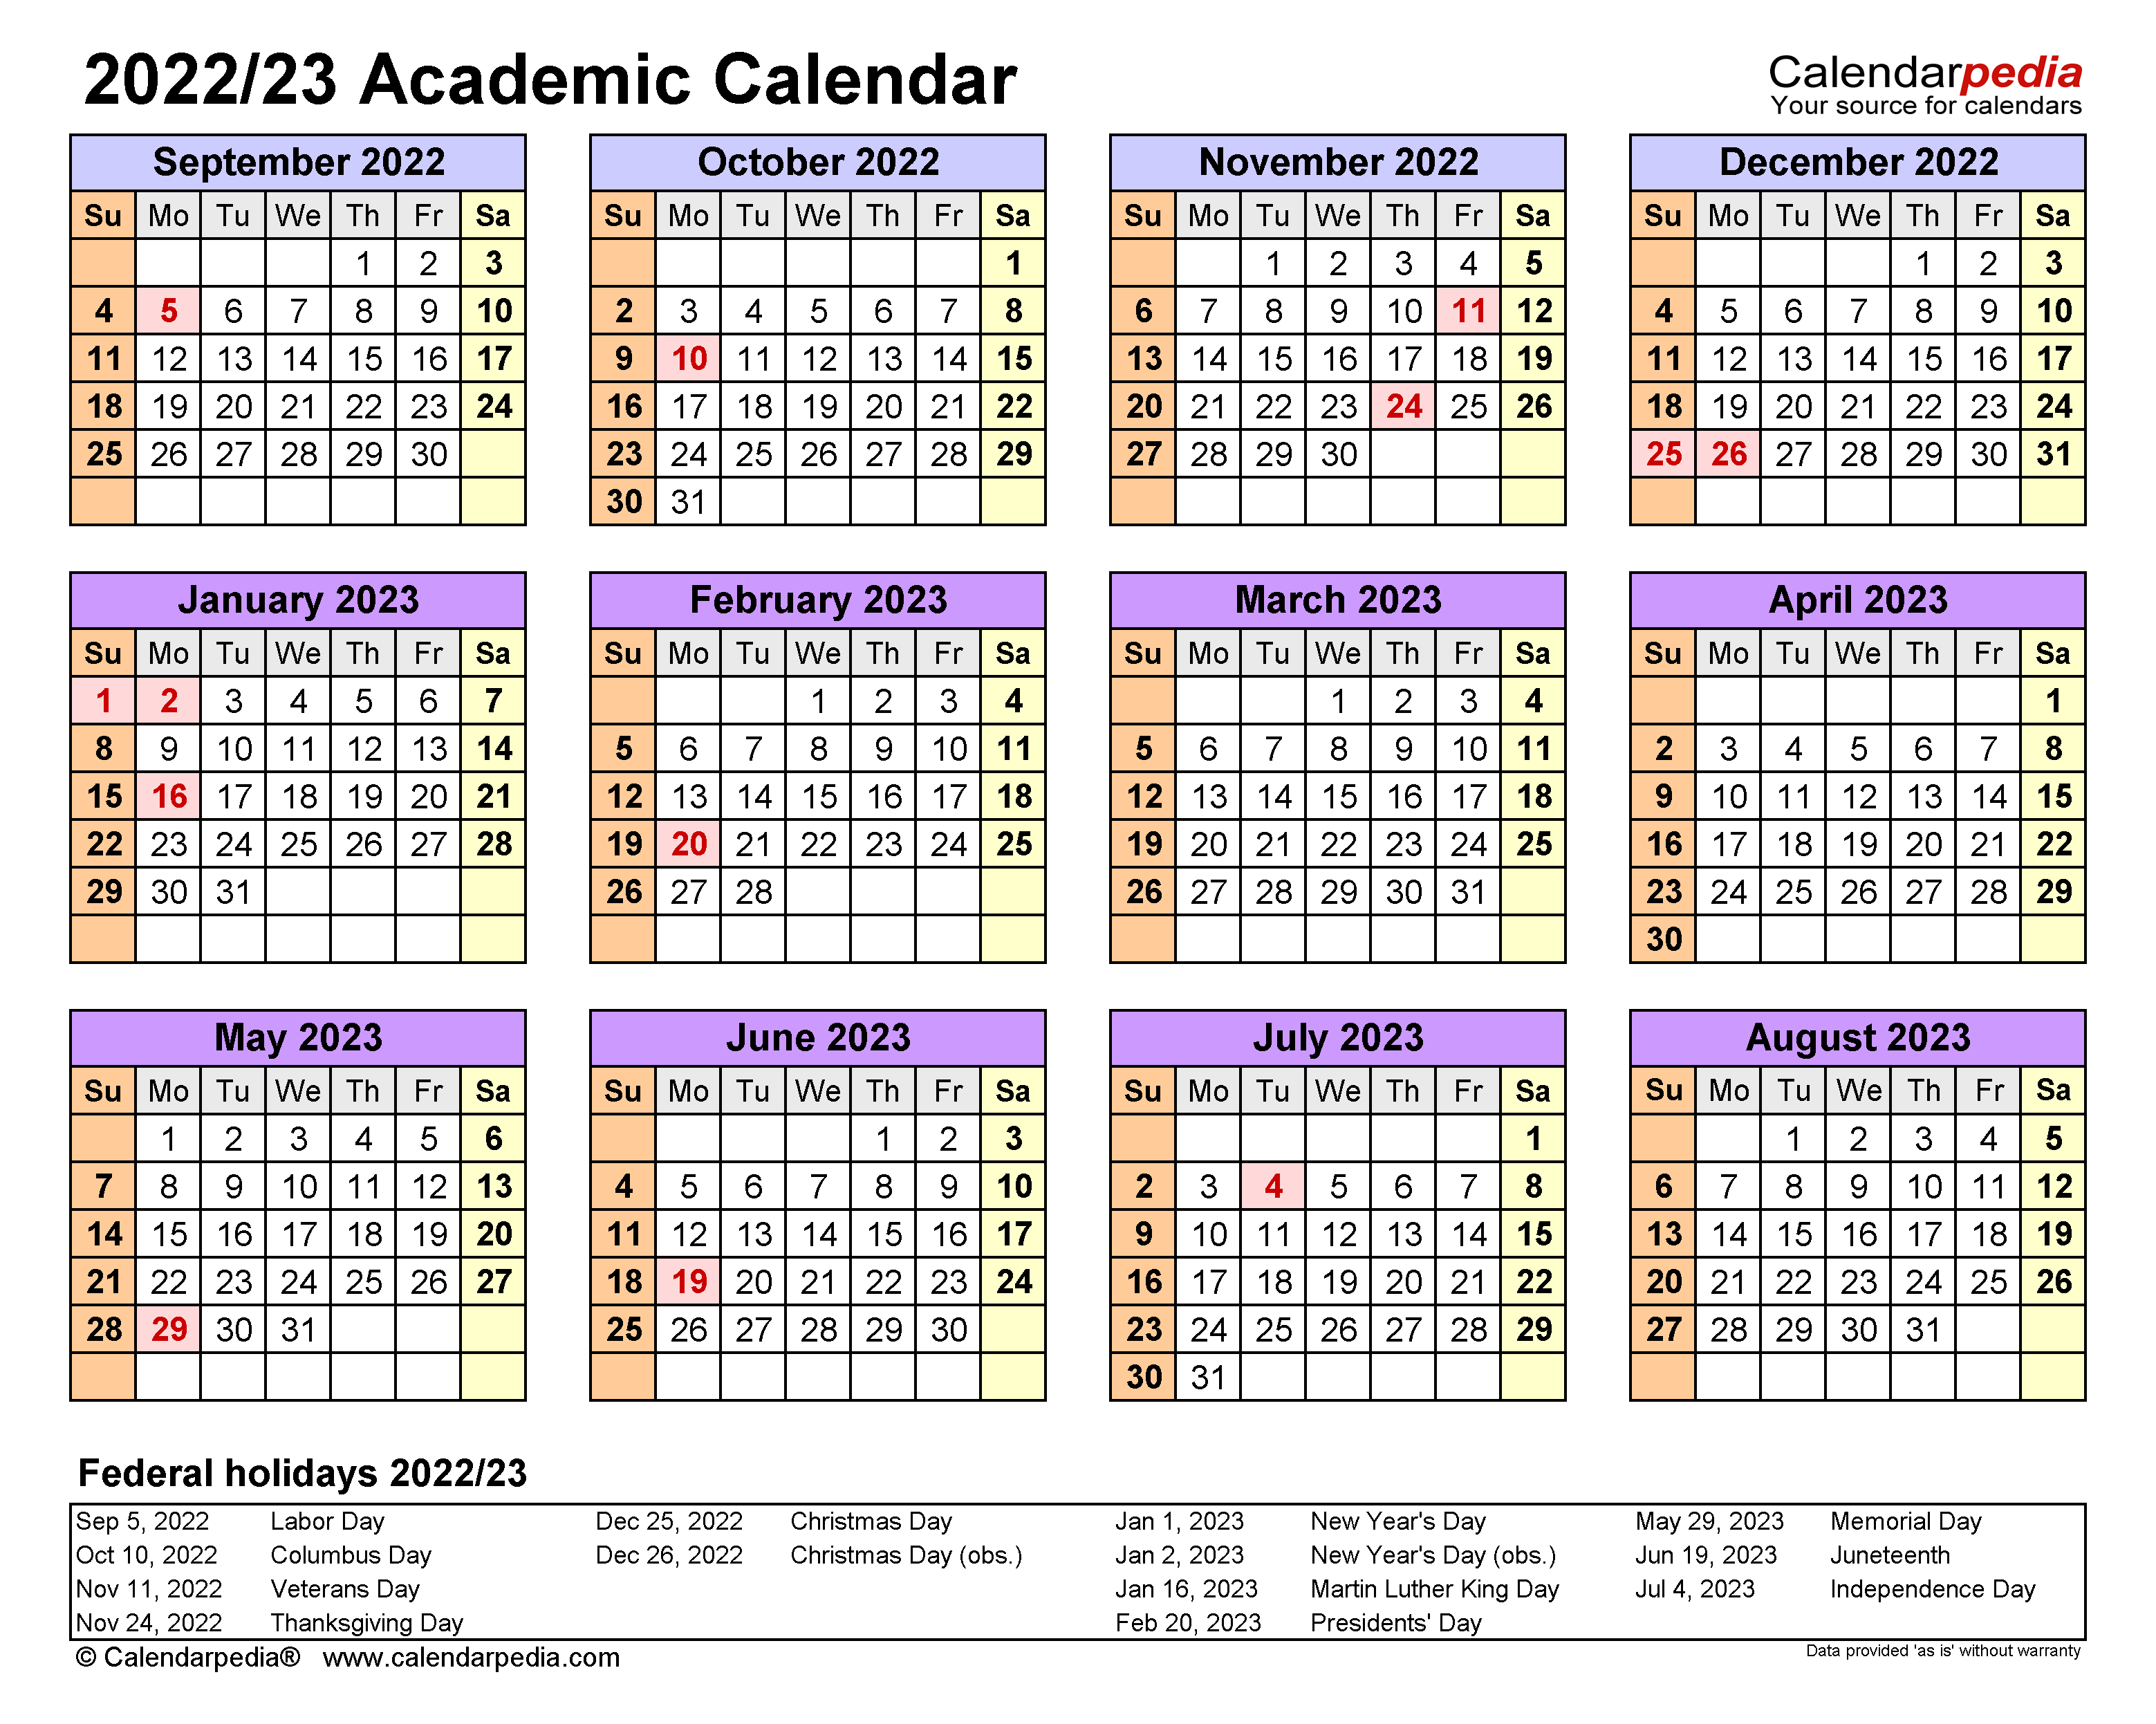 Chapman University Academic Calendar 2022 23 August 2022 Calendar